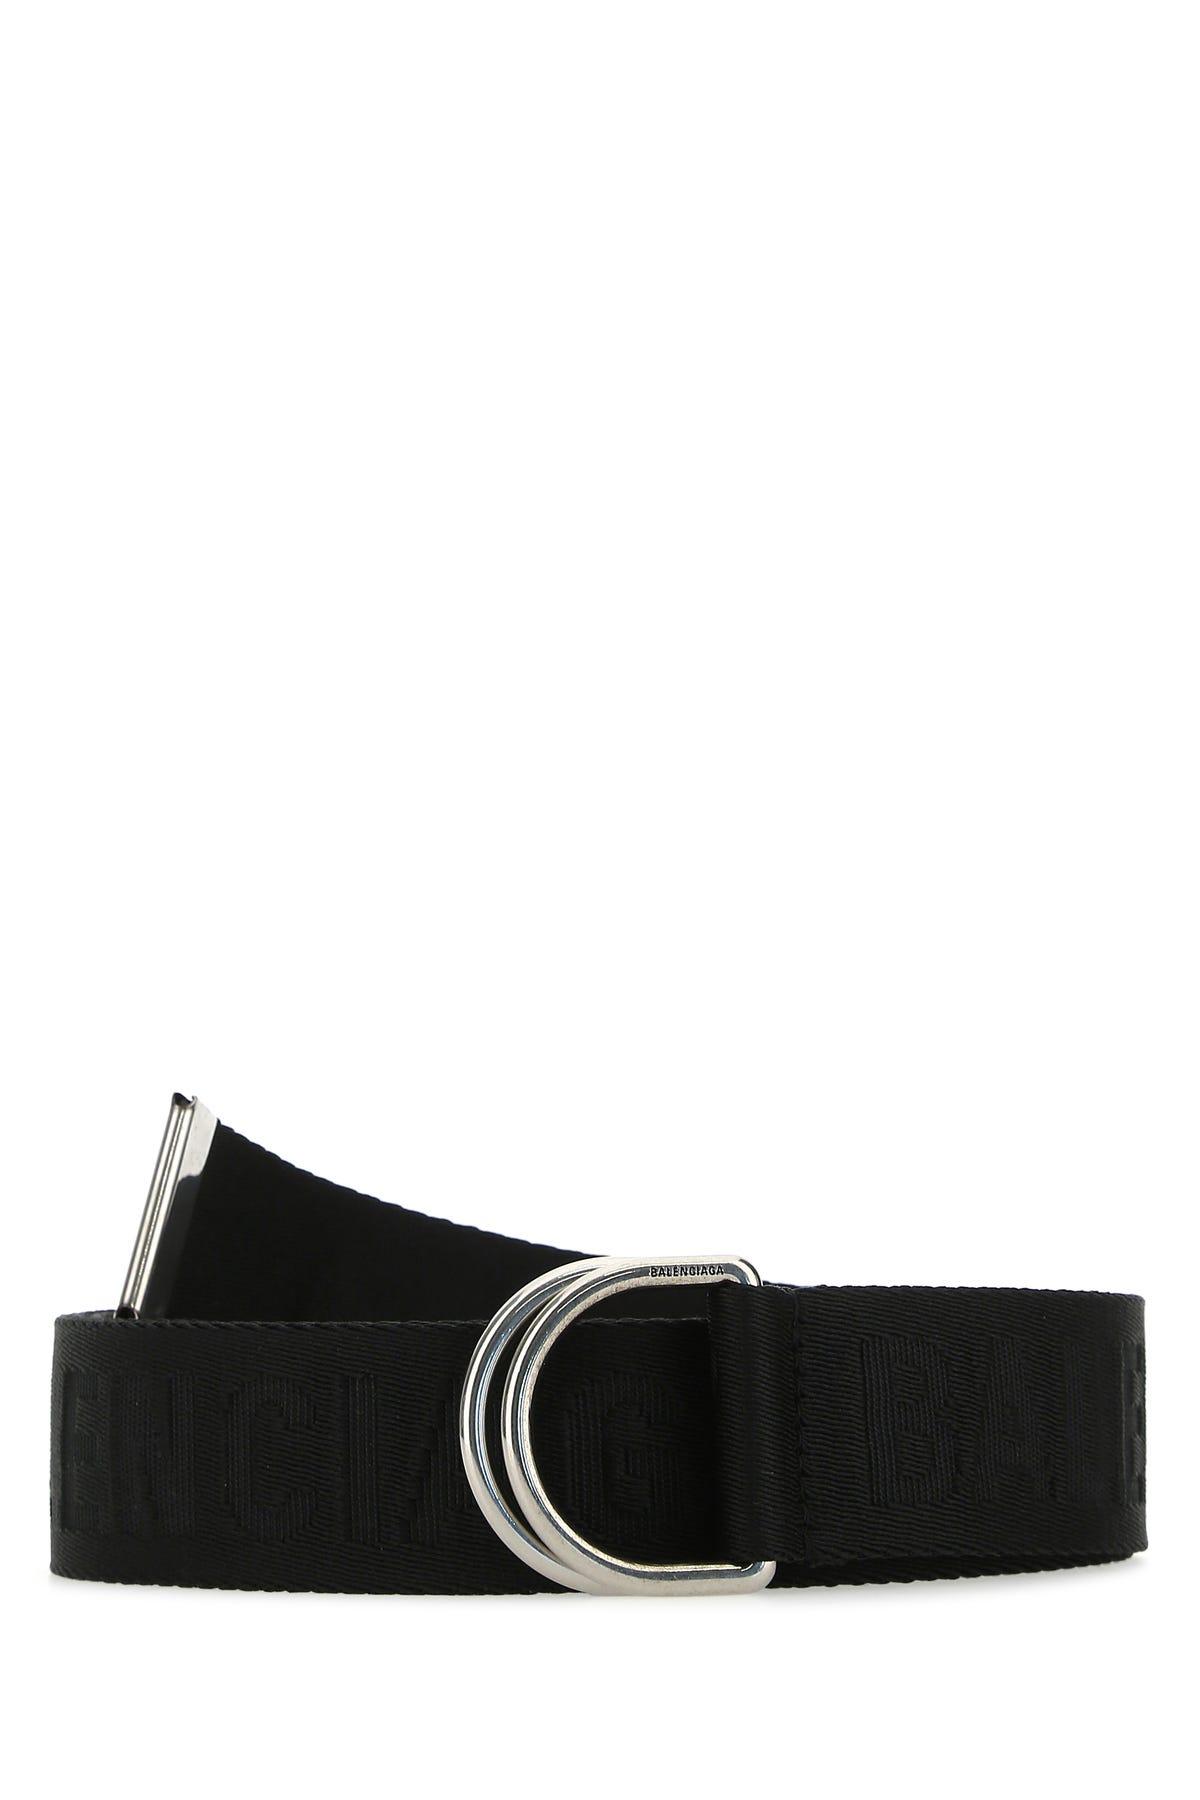 Balenciaga Polyester D Ring Belt in Black | Lyst